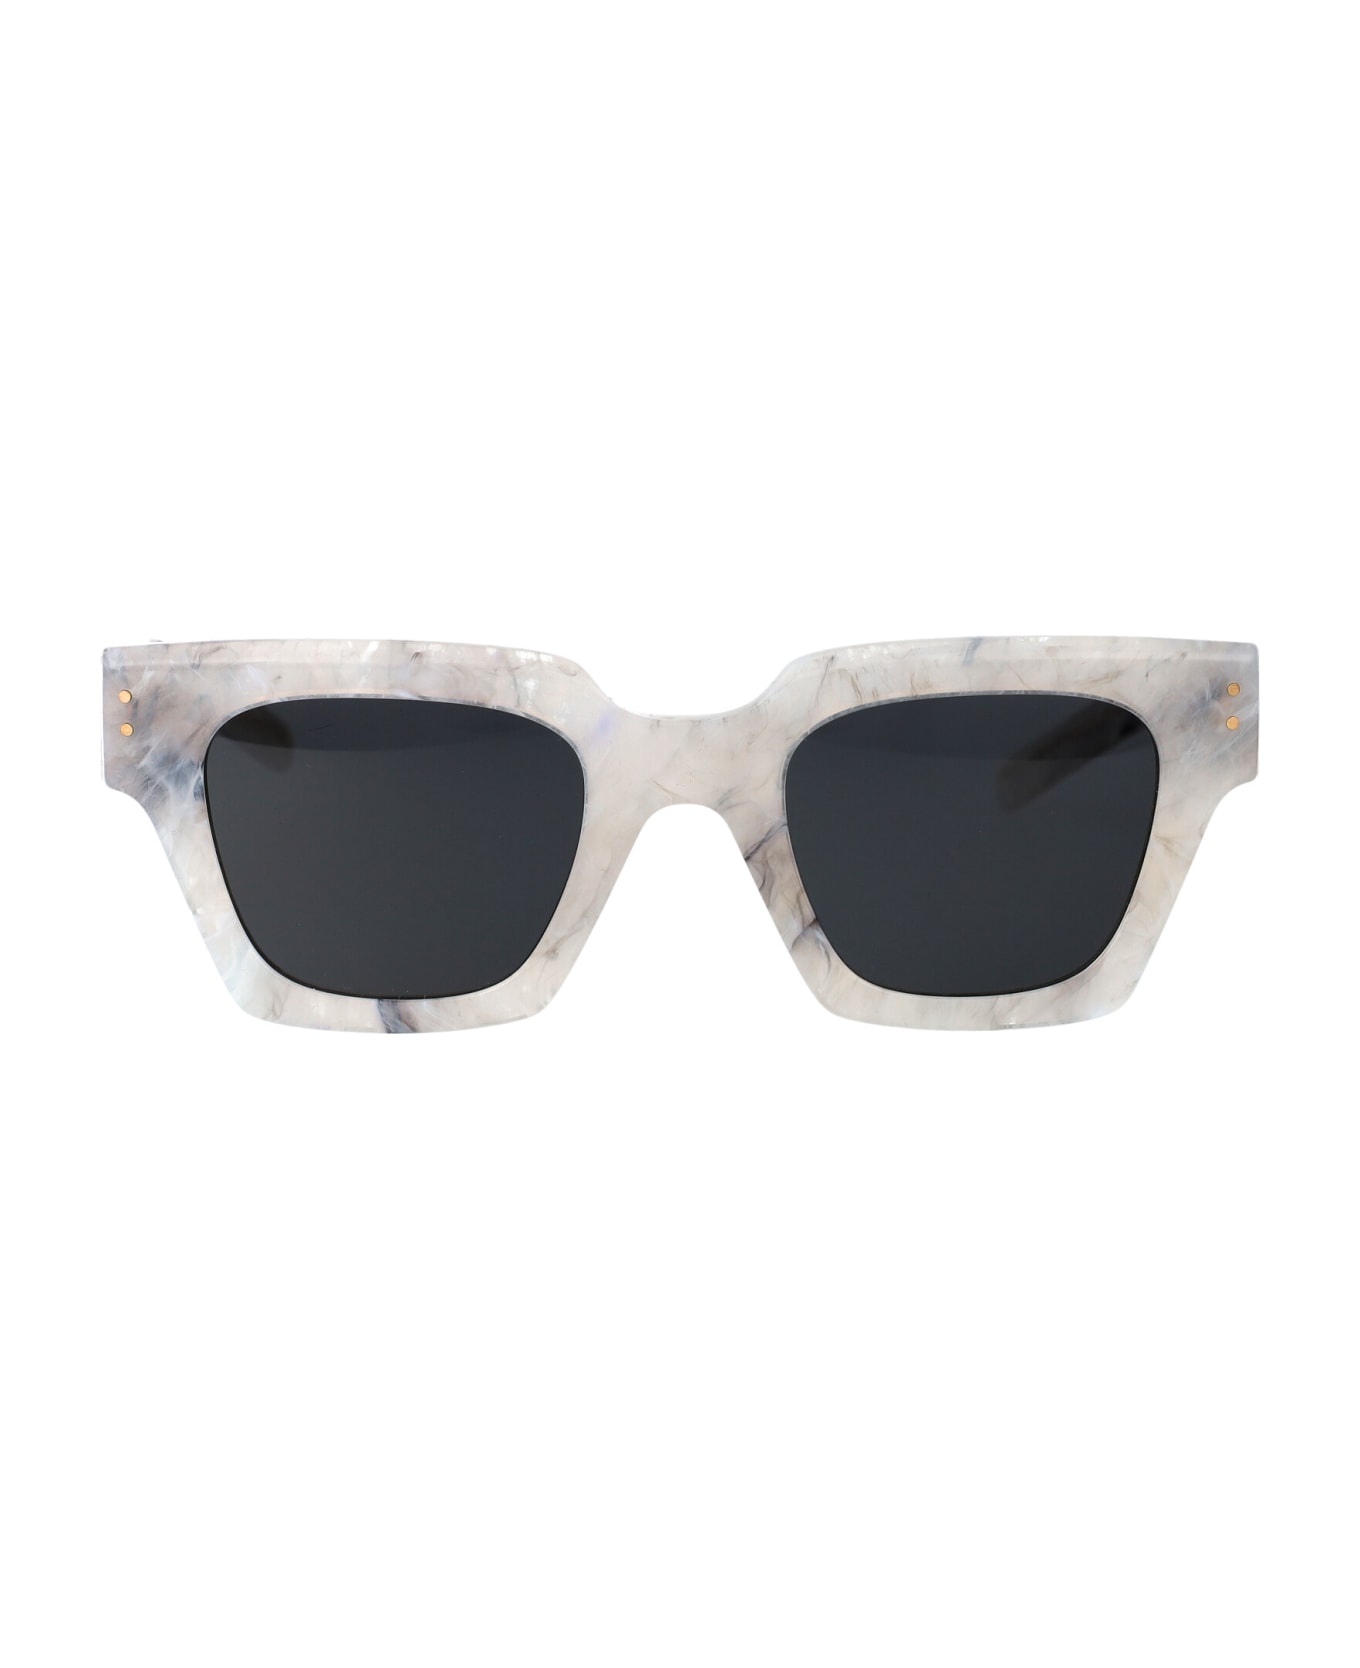 Dolce & Gabbana Eyewear 0dg4413 Sunglasses - 342887 Grey Marble サングラス